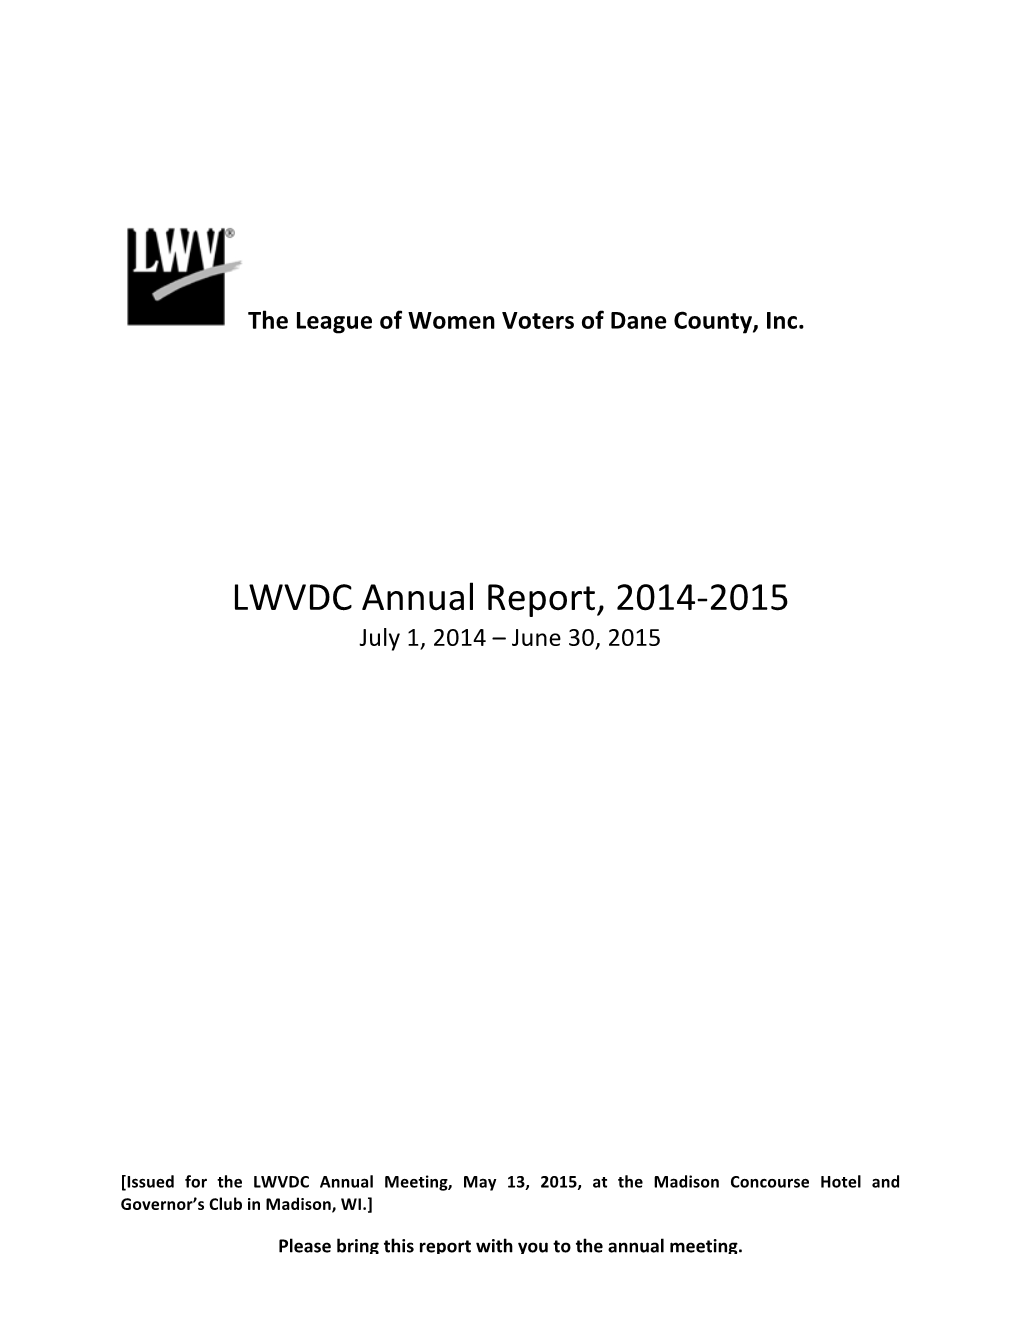 Annual Report, 2014-2015 July 1, 2014 – June 30, 2015